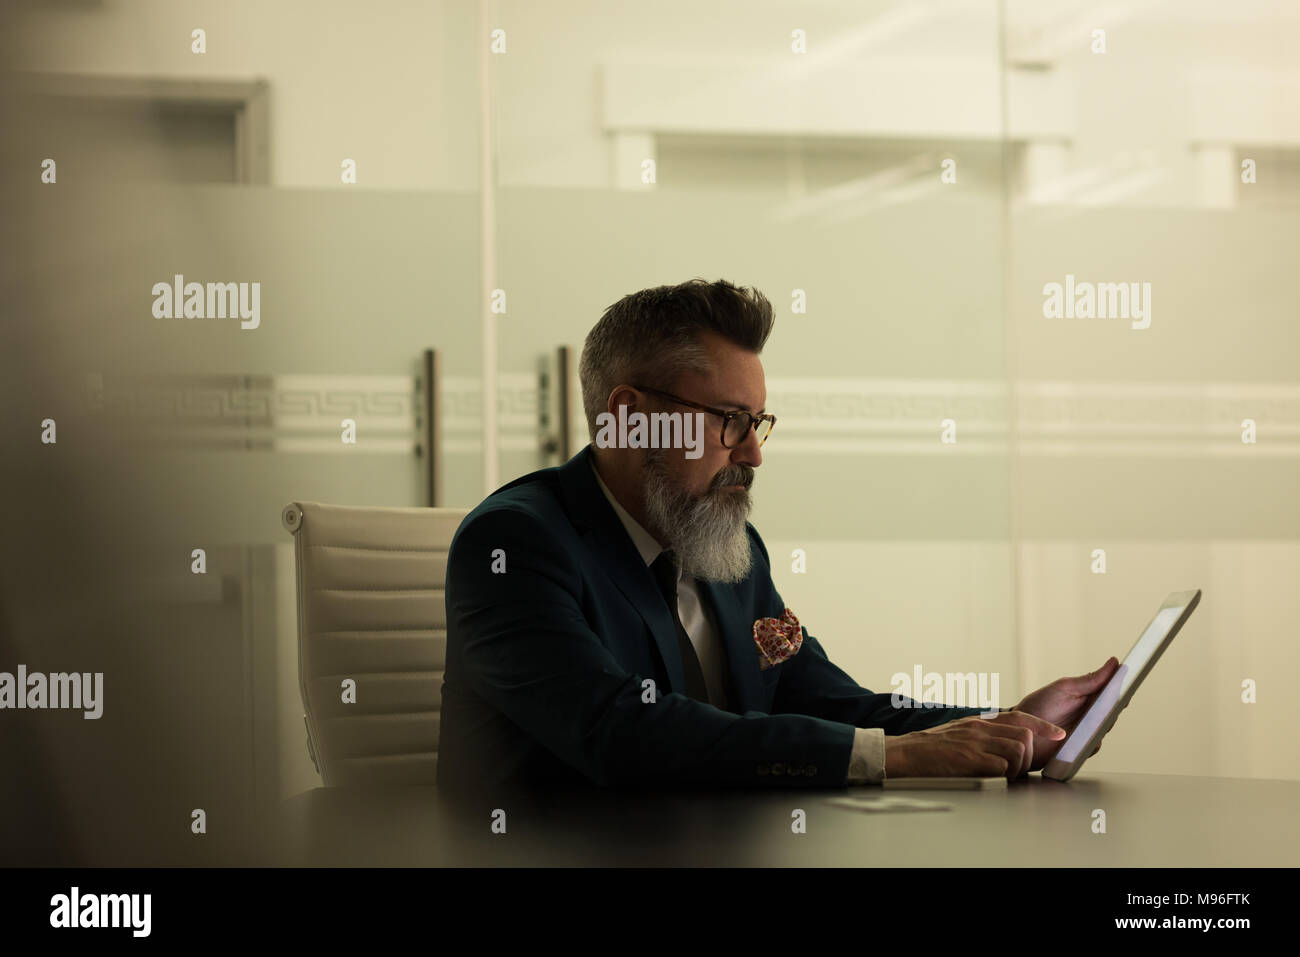 Business executive using digital tablet Banque D'Images